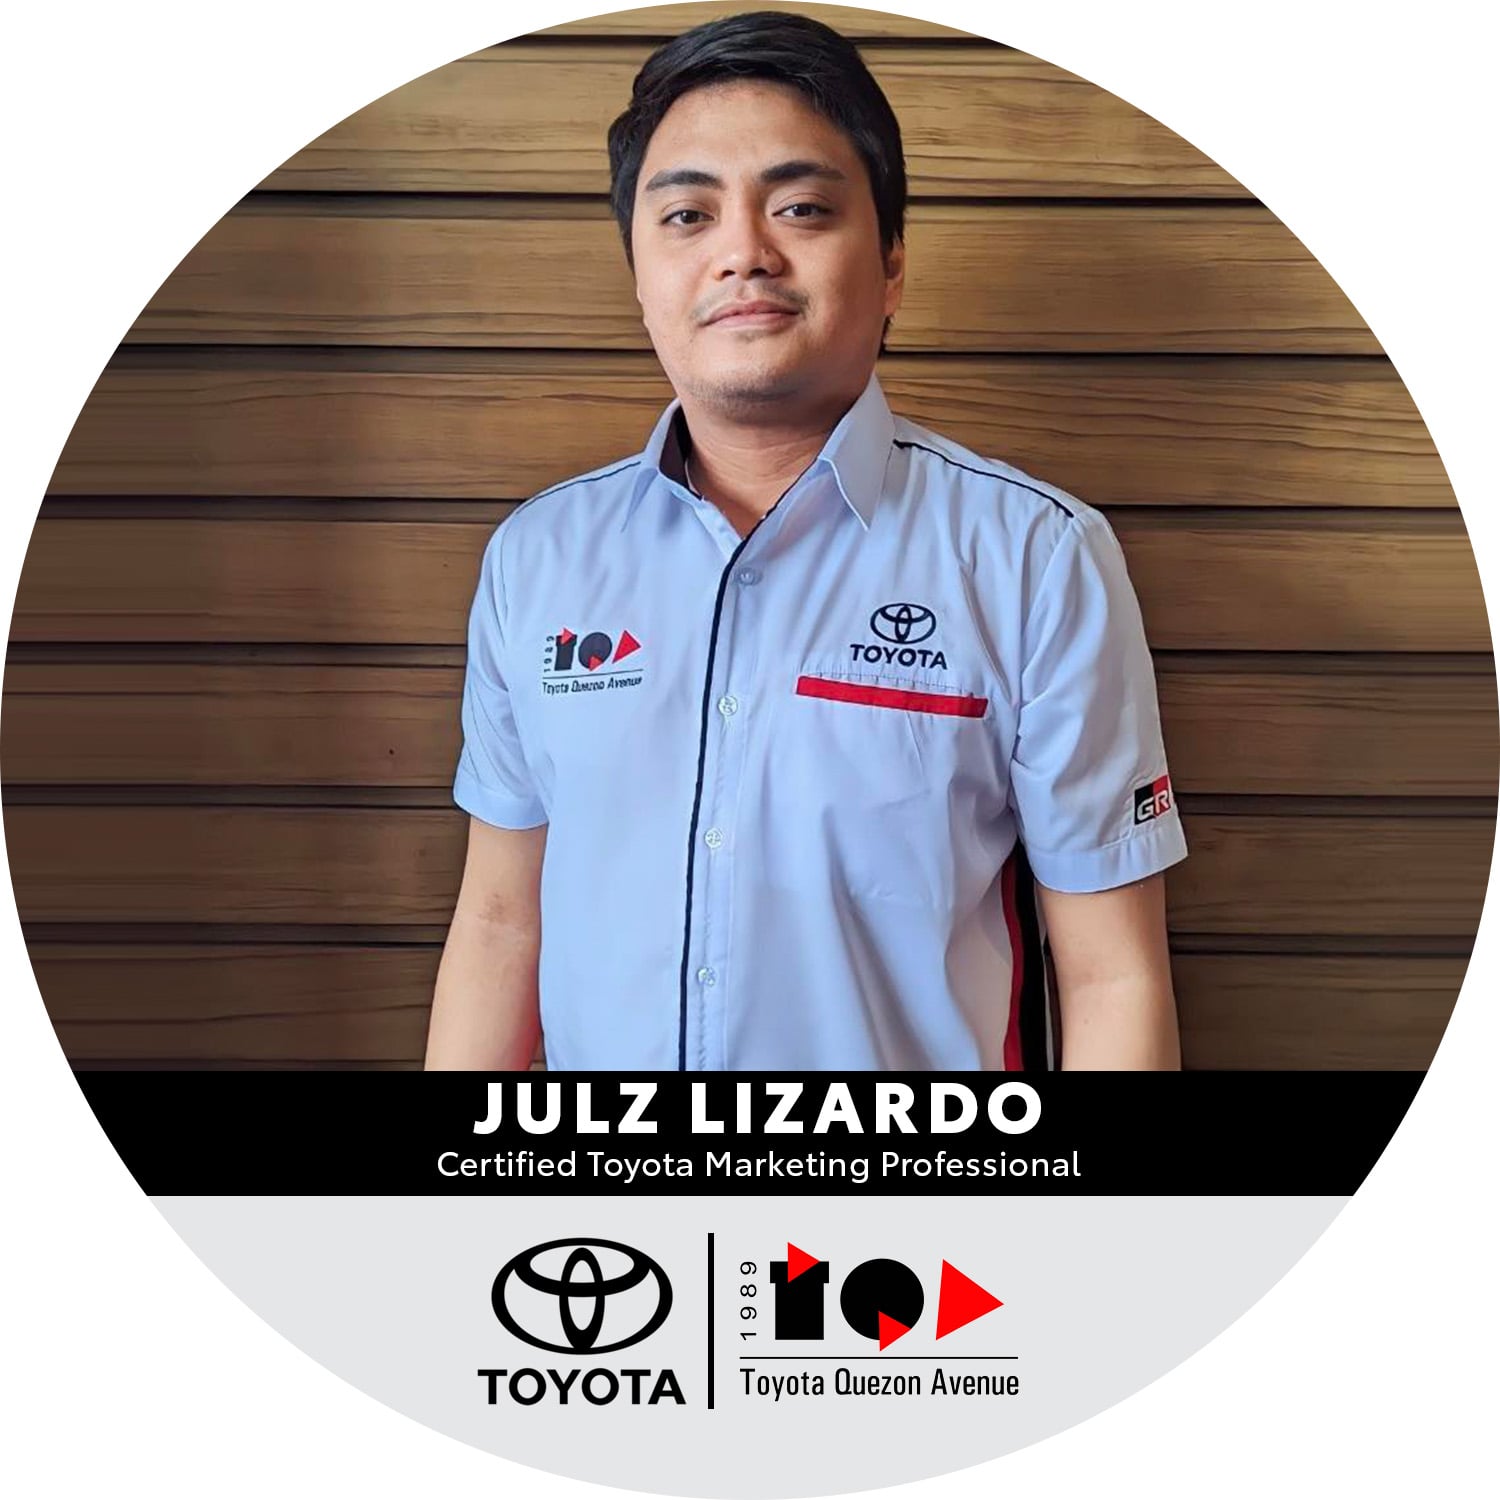 Certified Toyota Marketing Professionals - Julz Lizardo